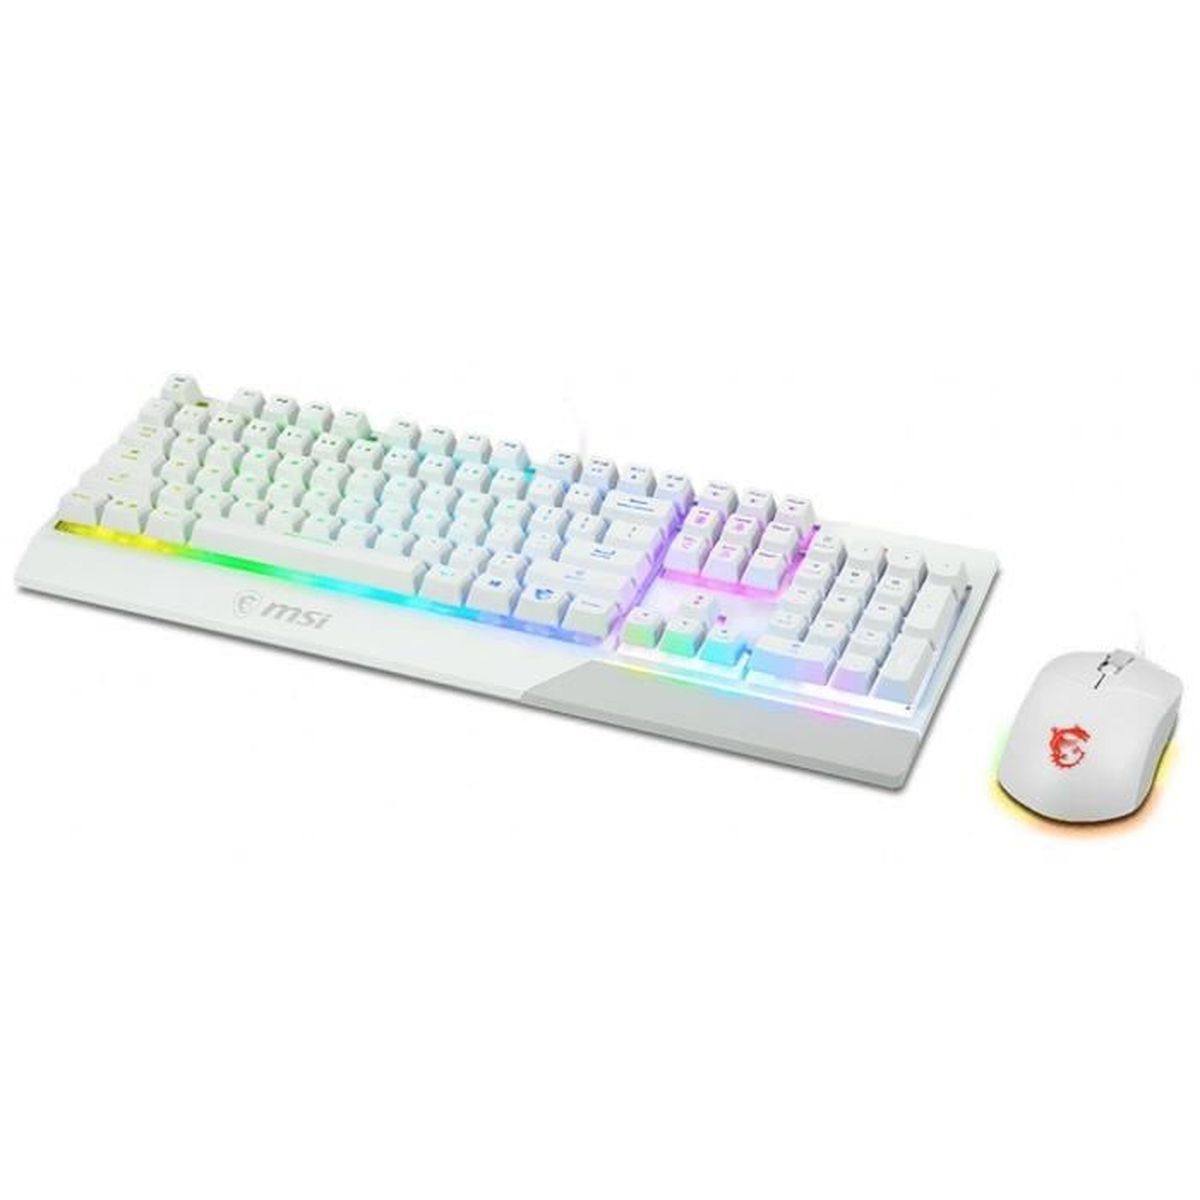 MSI Vigor GK30 Combo, Weiß Tastatur-Maus-Set